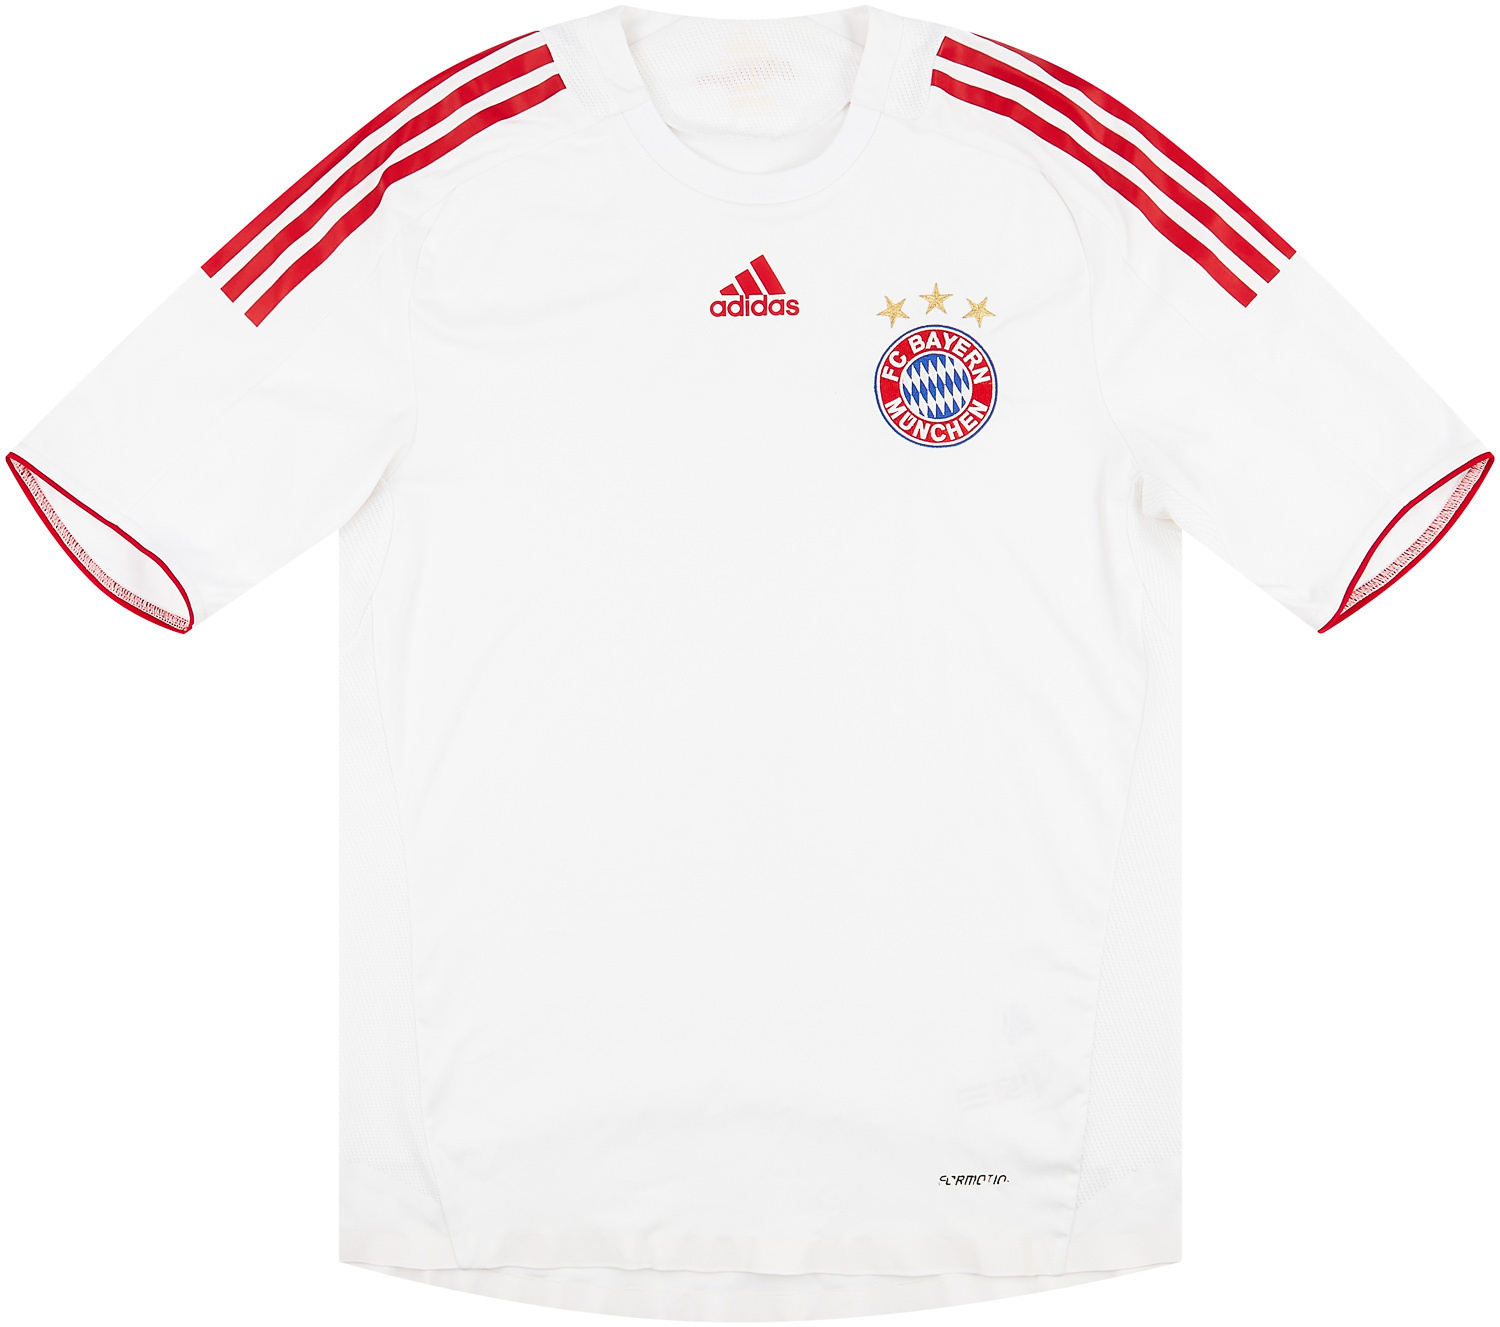 2008-09 Bayern Munich Player Issue CL Shirt - 9/10 - ()